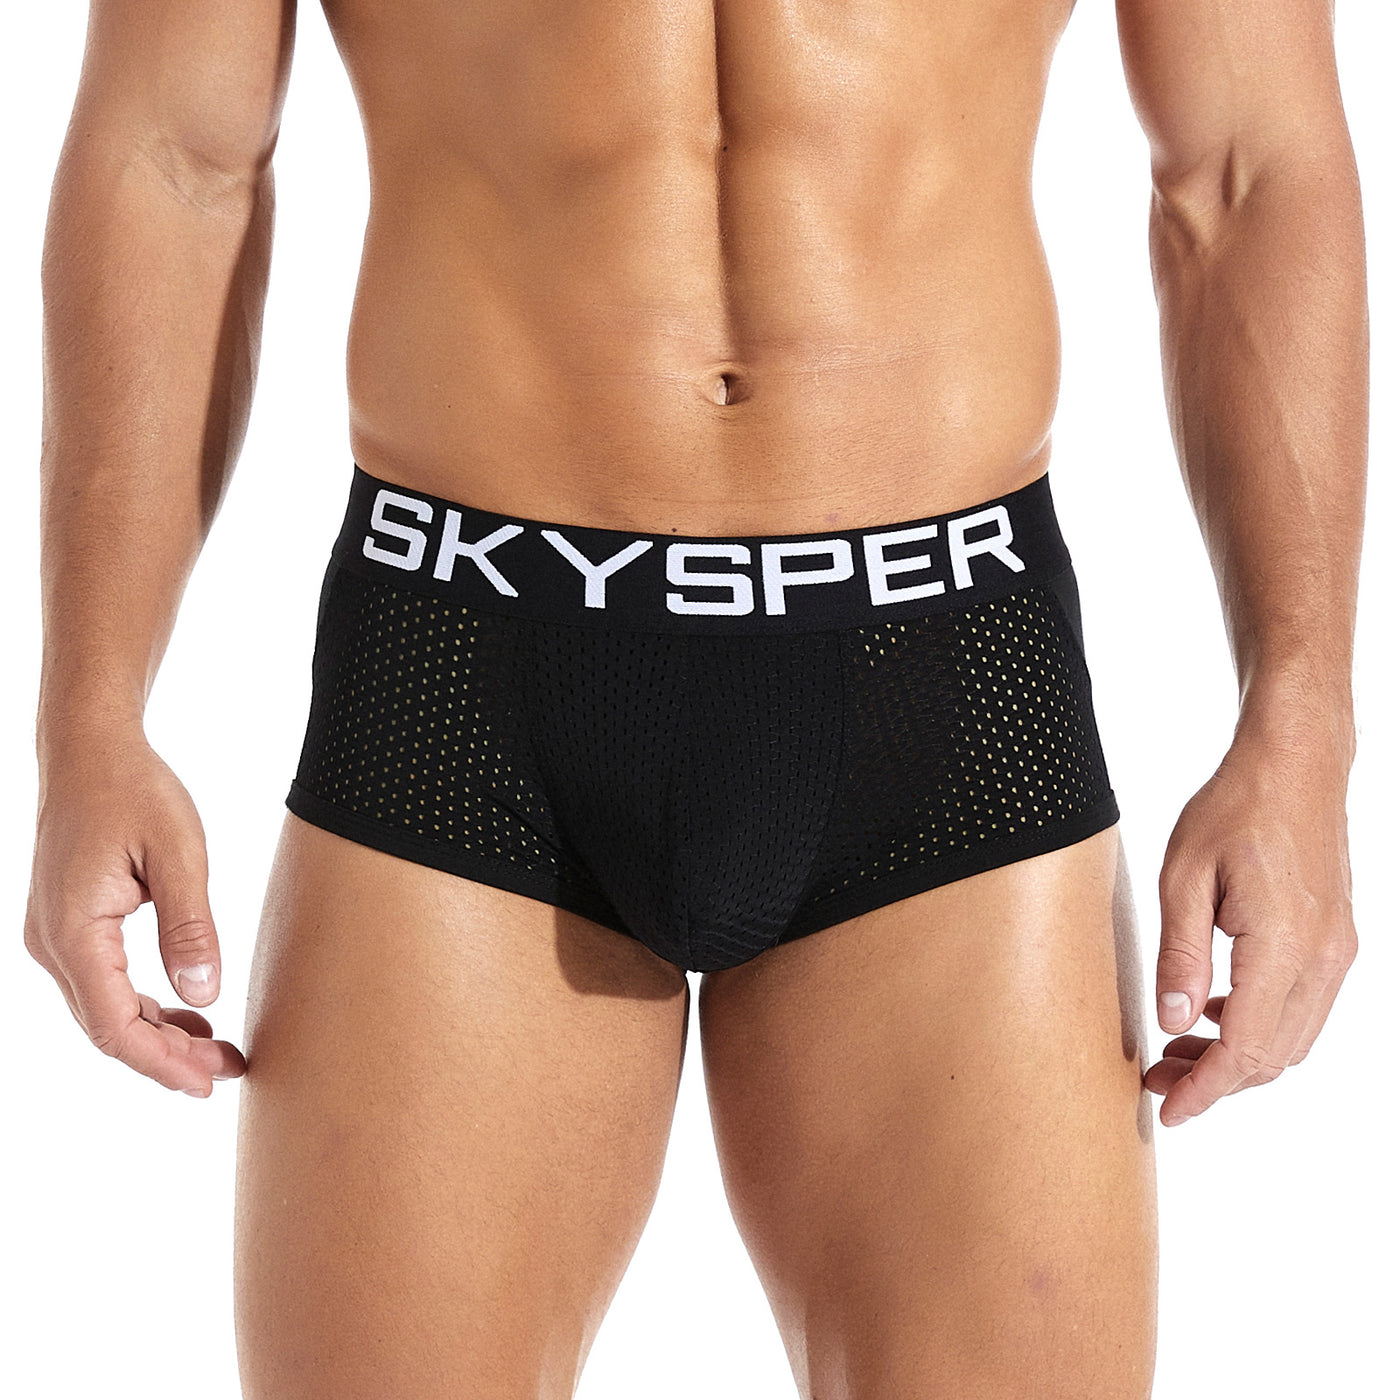 SKYSPER SG19 - Men's Jockstrap Cotton & Mesh Underwear Athletic Supporter